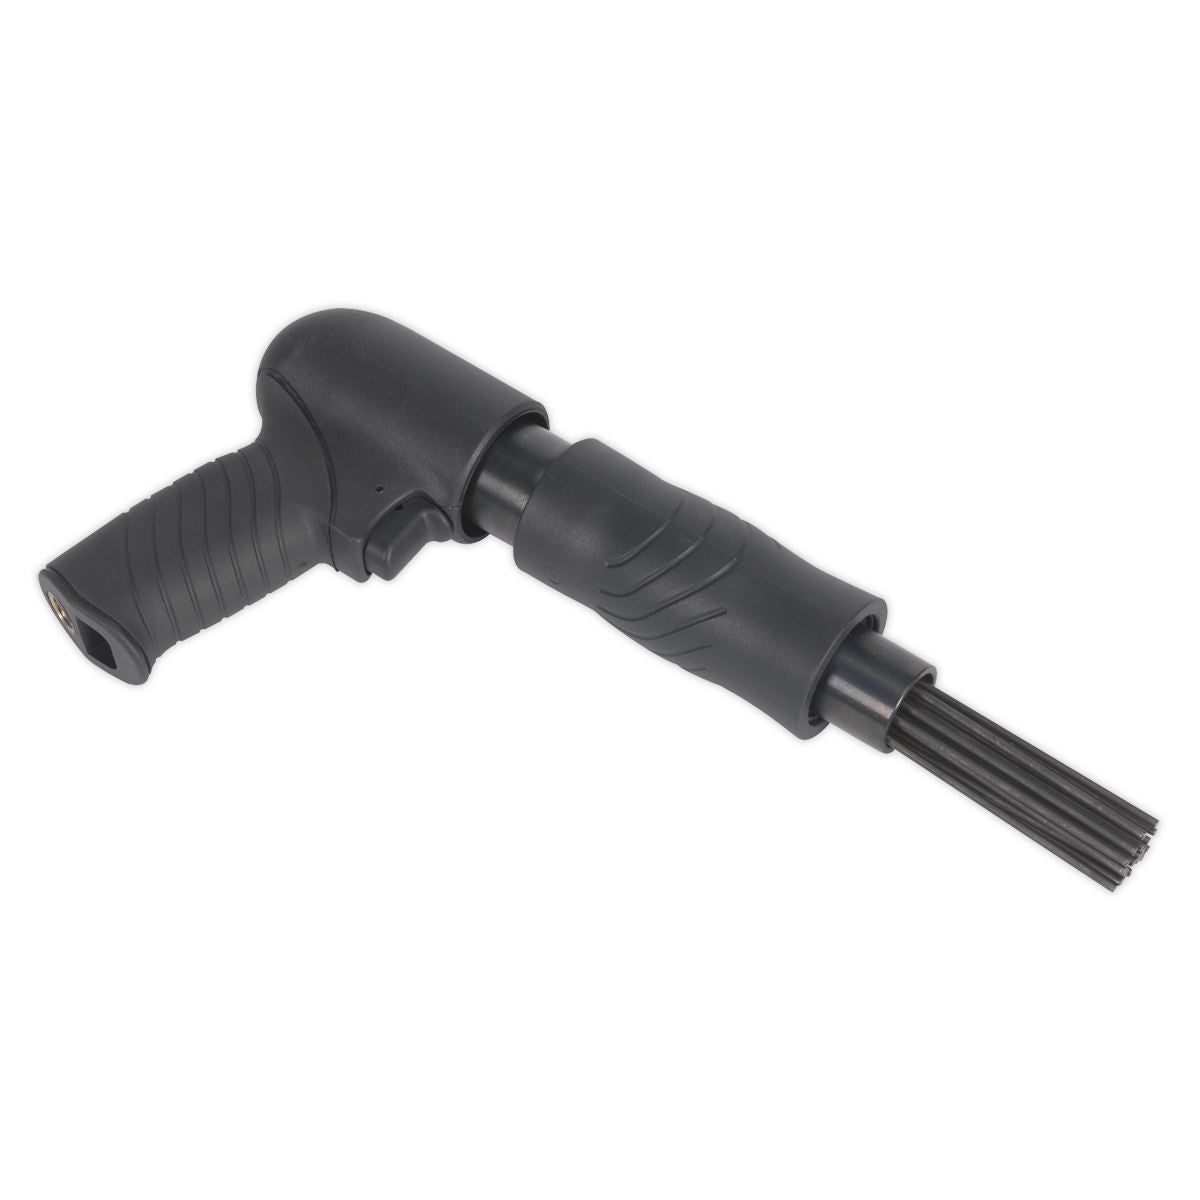 Sealey Premier Air Needle Scaler Composite Pistol Type